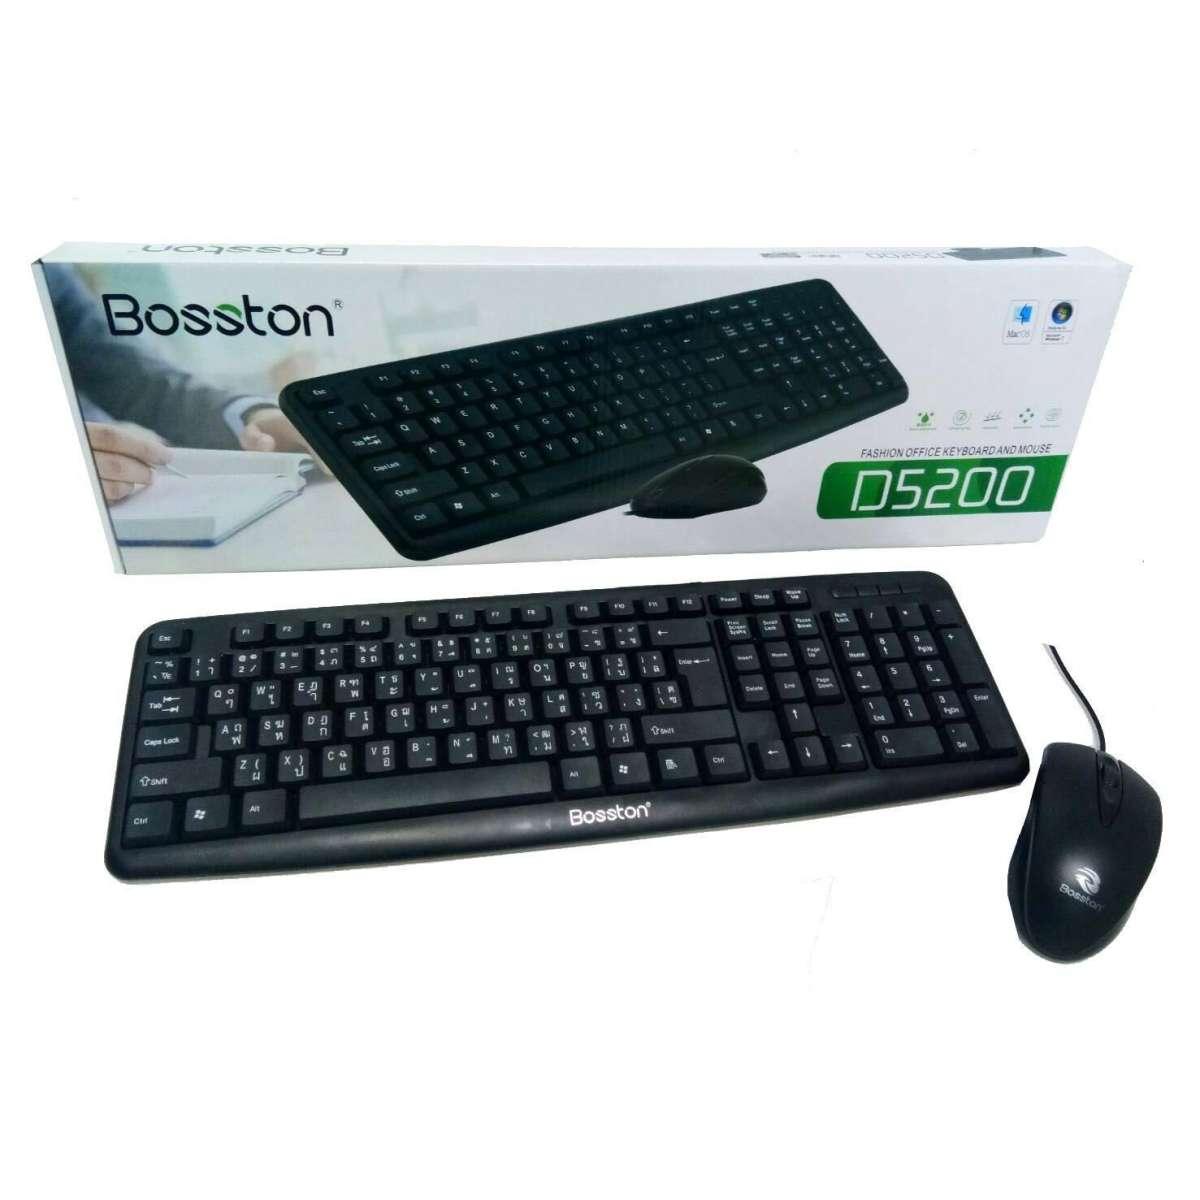 Bosston D5200 USB Keyboard Mouse คีย์บอร์ด เมาส์ Black